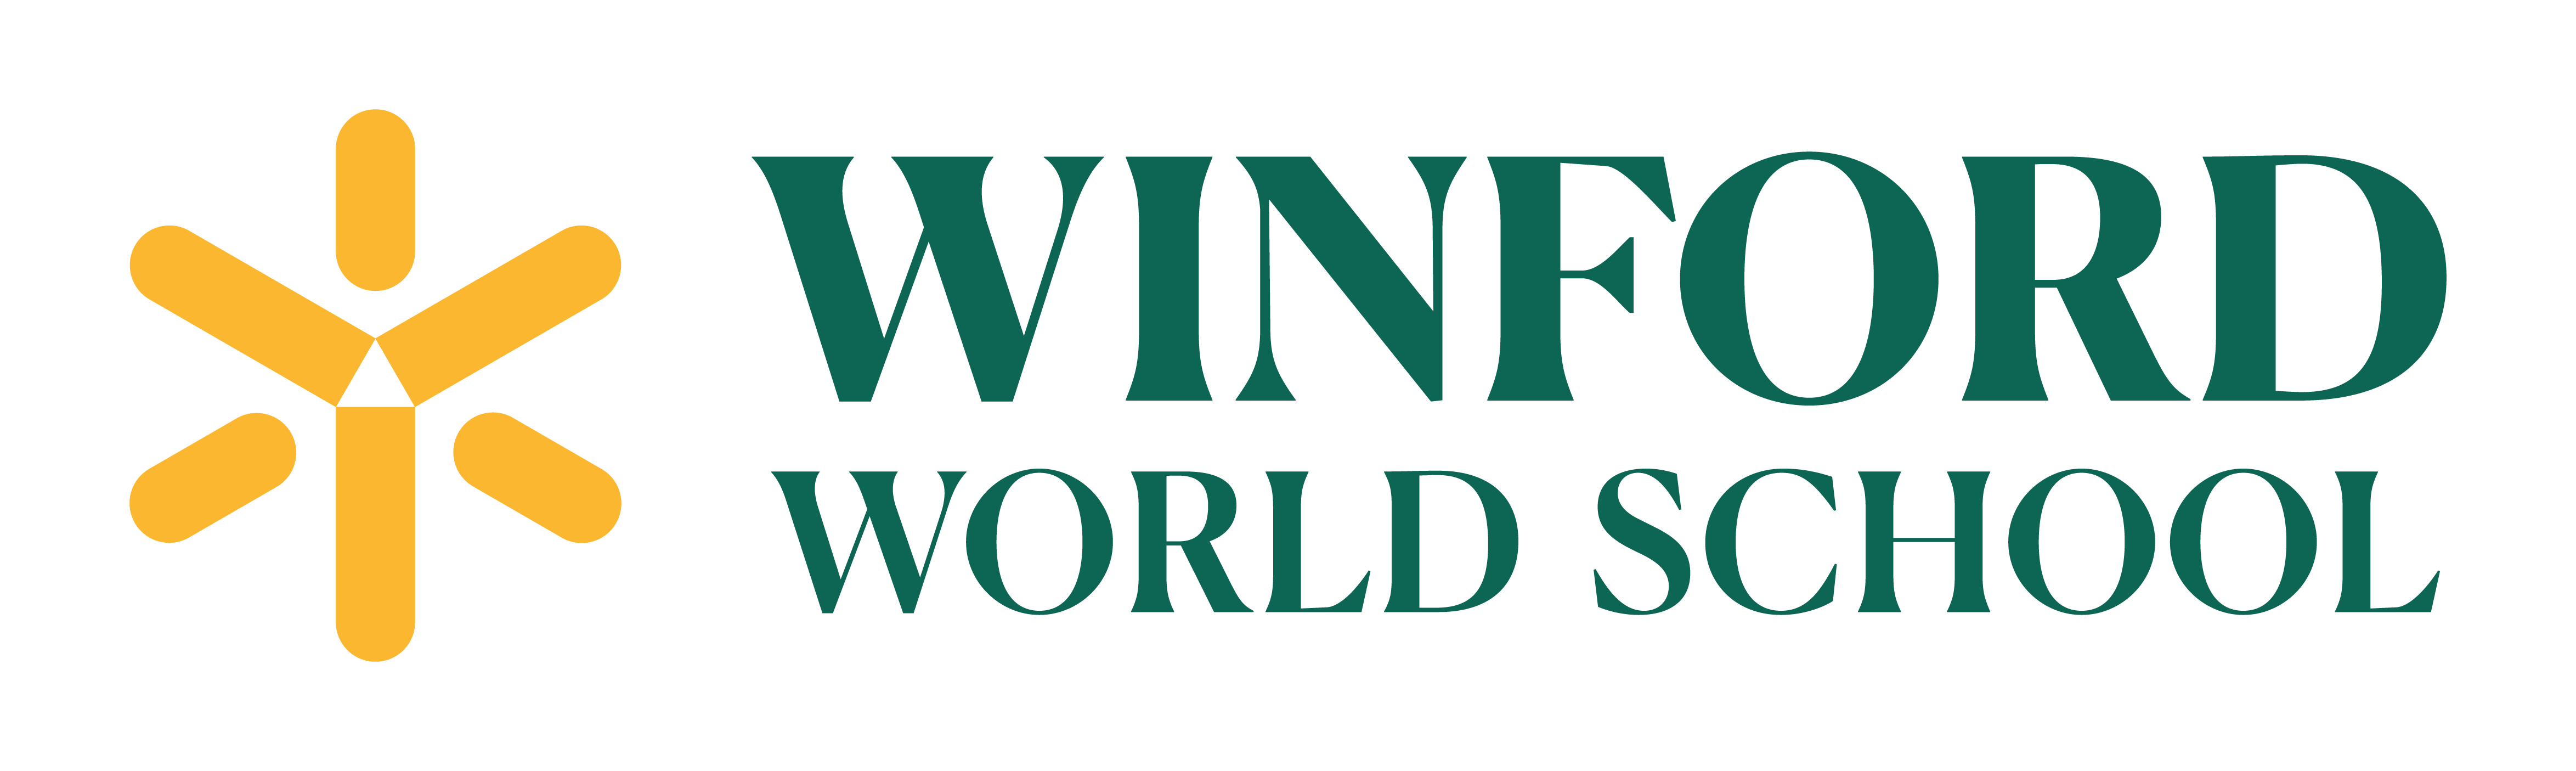 Winford World School